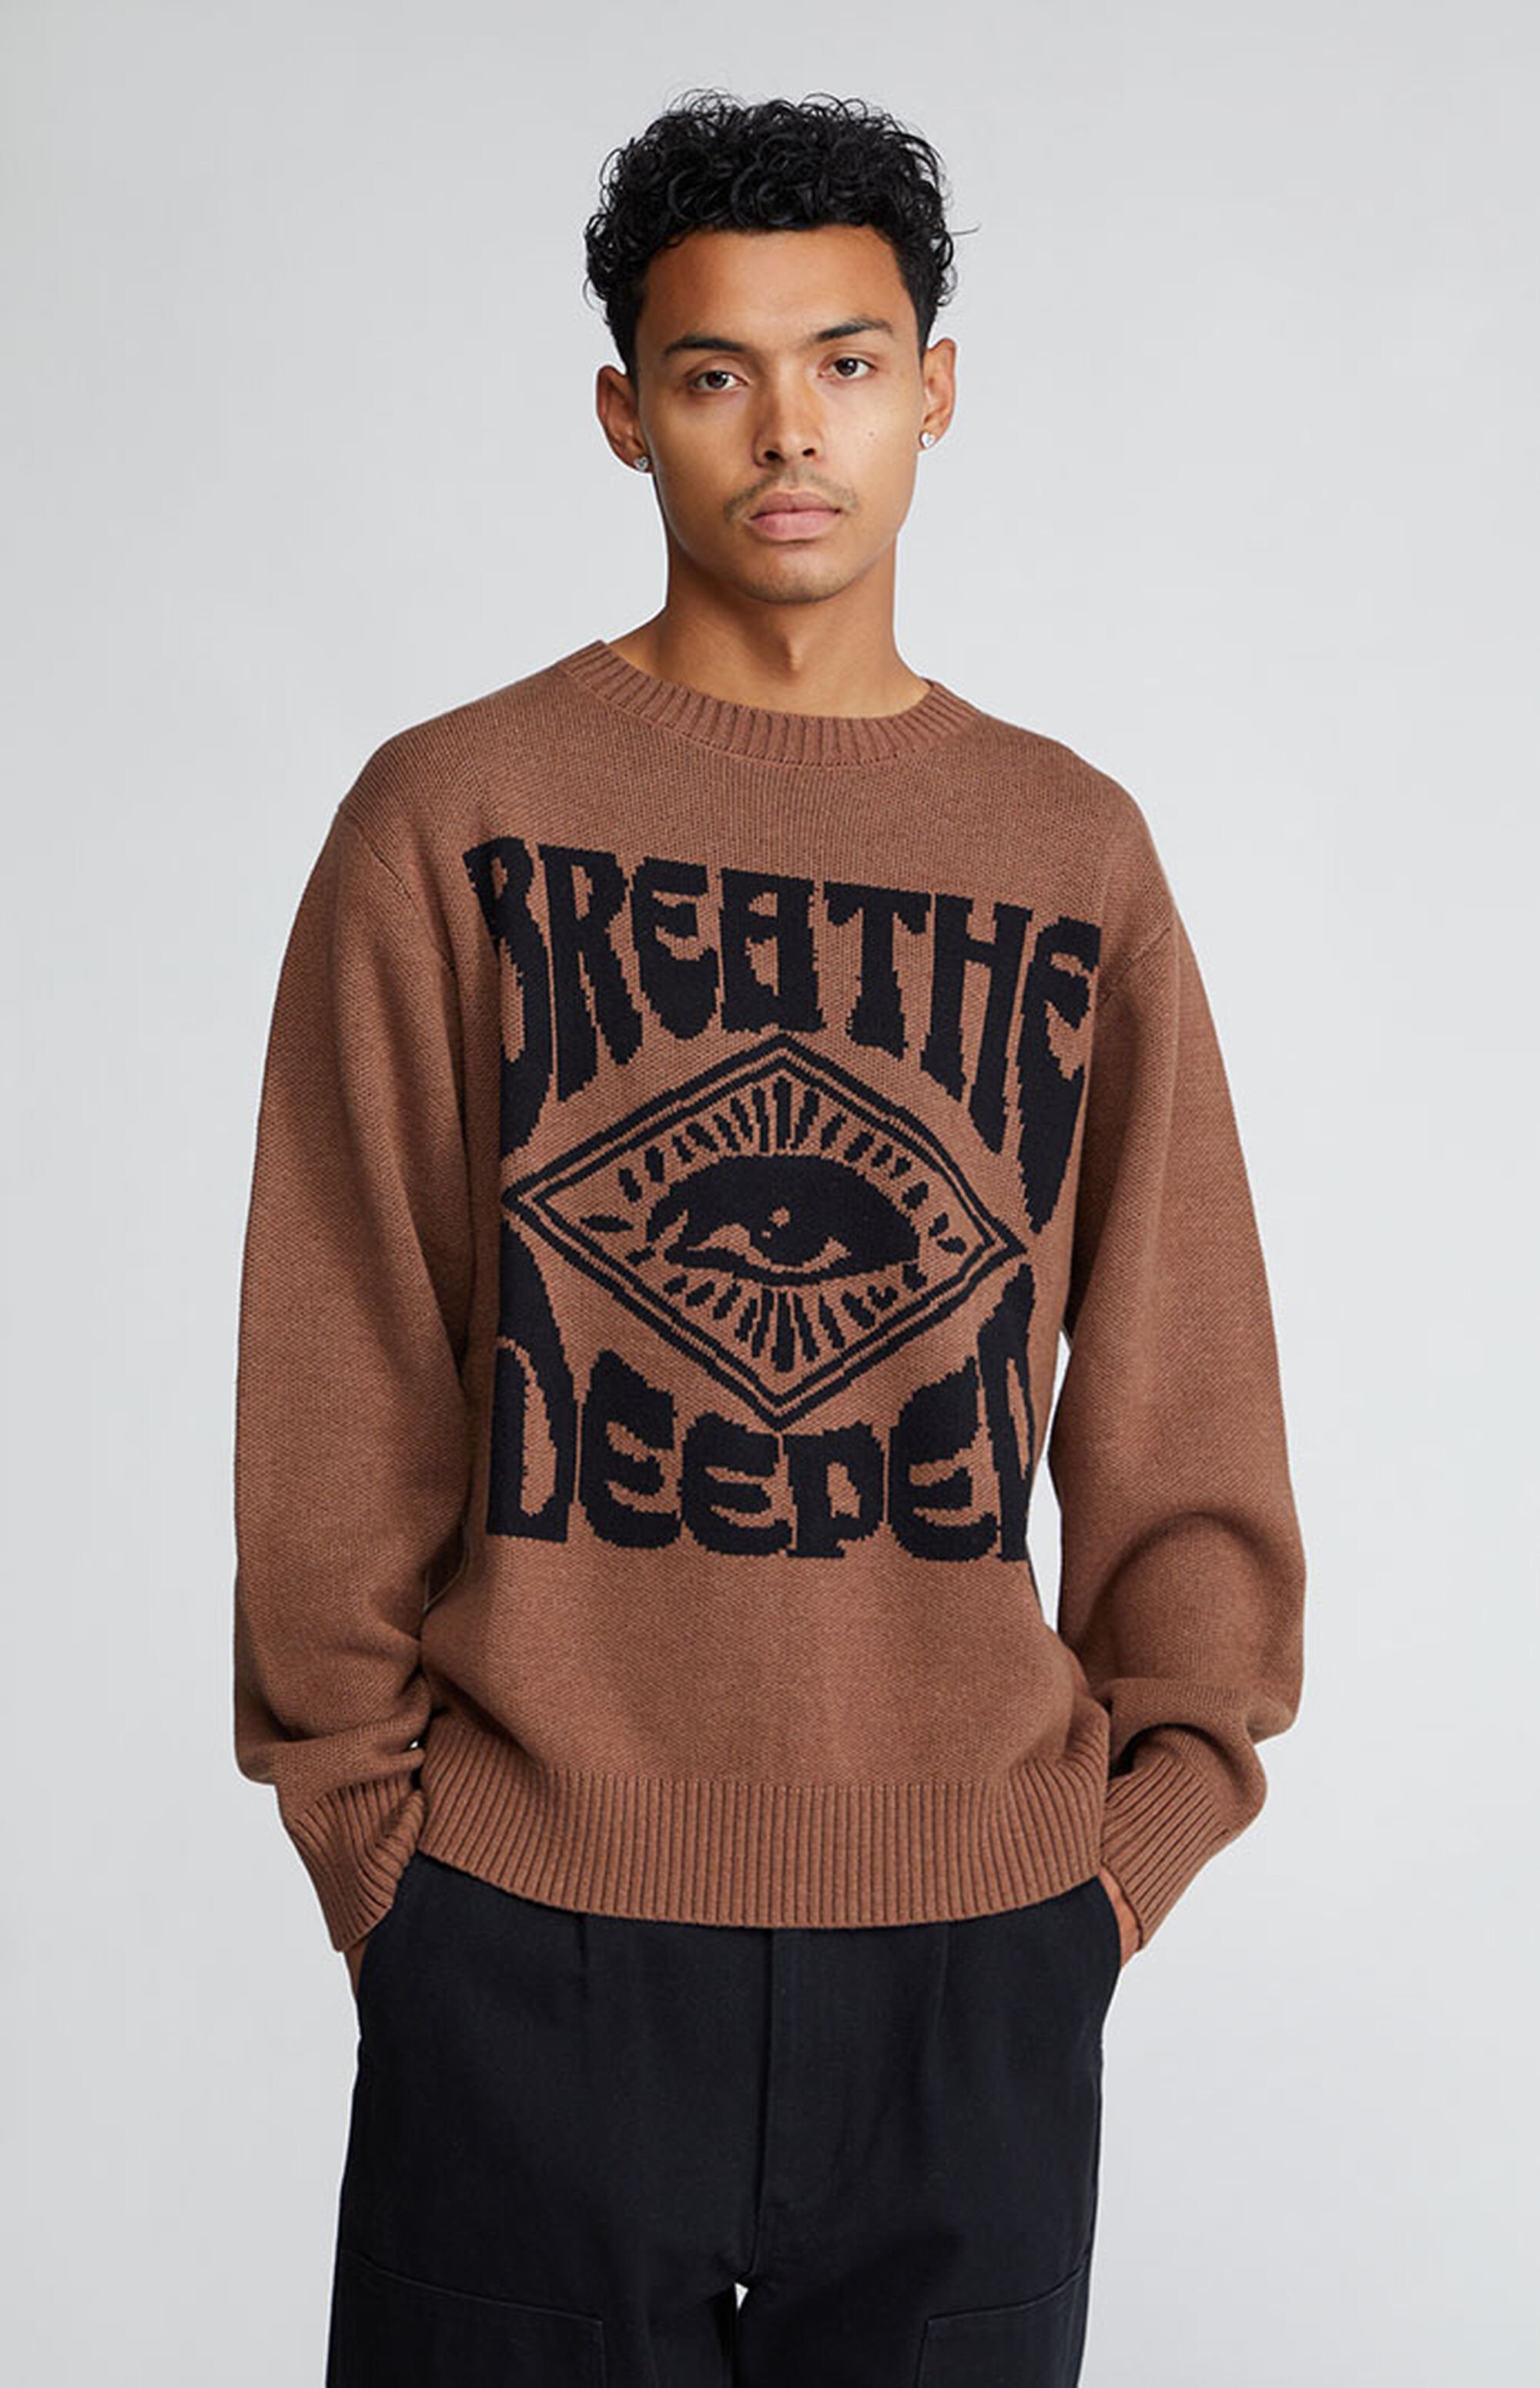 PacSun Breathe Deeper Crew Sweater | PacSun